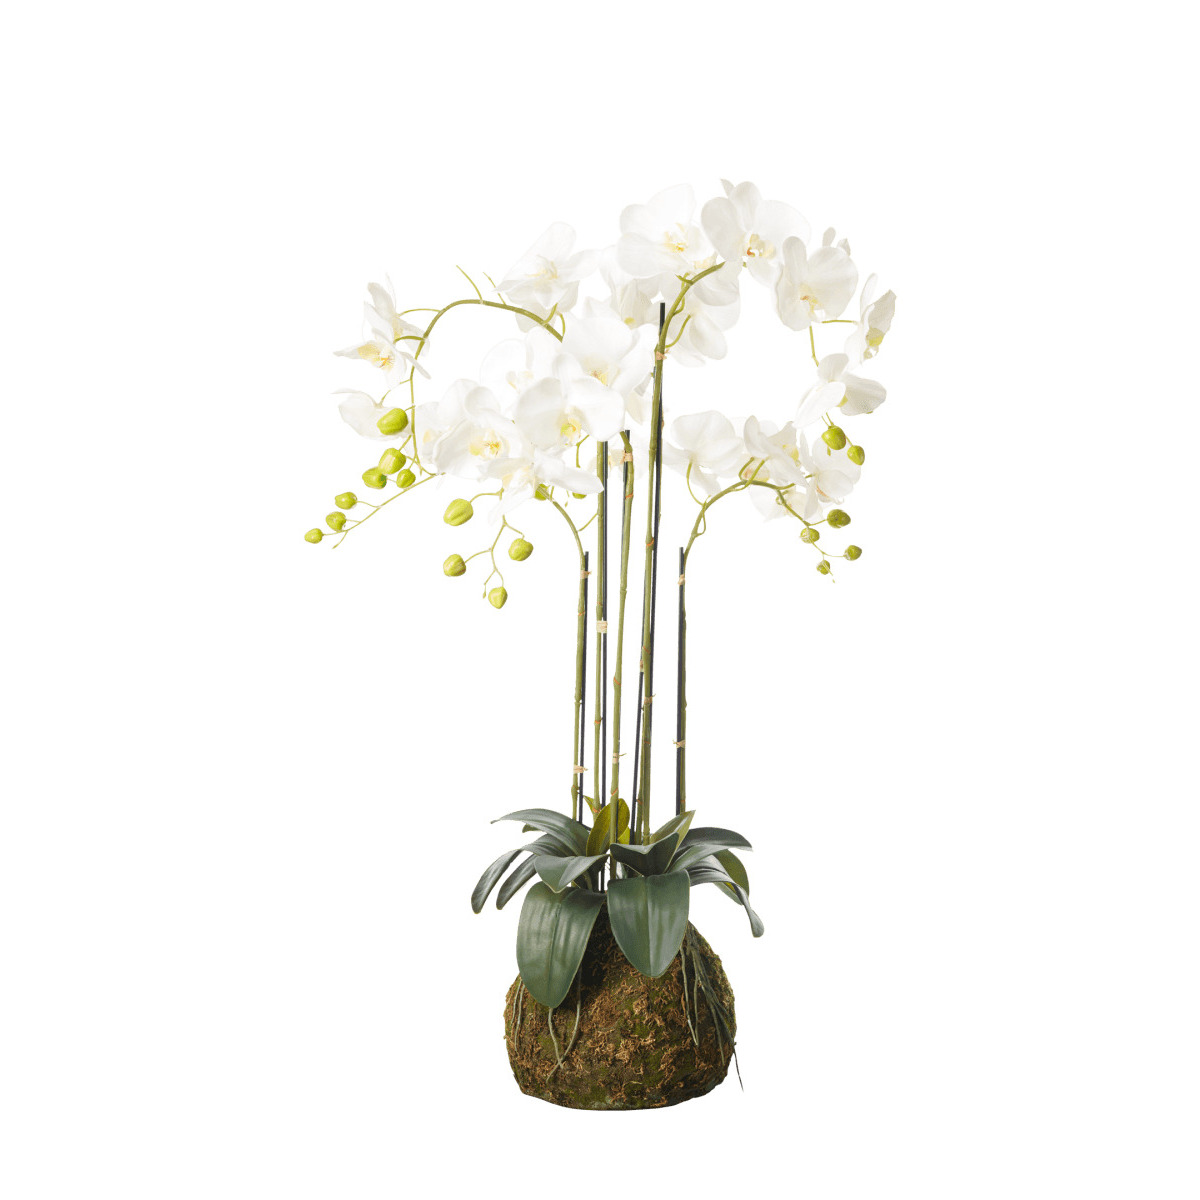 OKA, Faux Planted Phalaenopsis Orchid, Medium - White, Artificial Plants, Fabric/Plastic